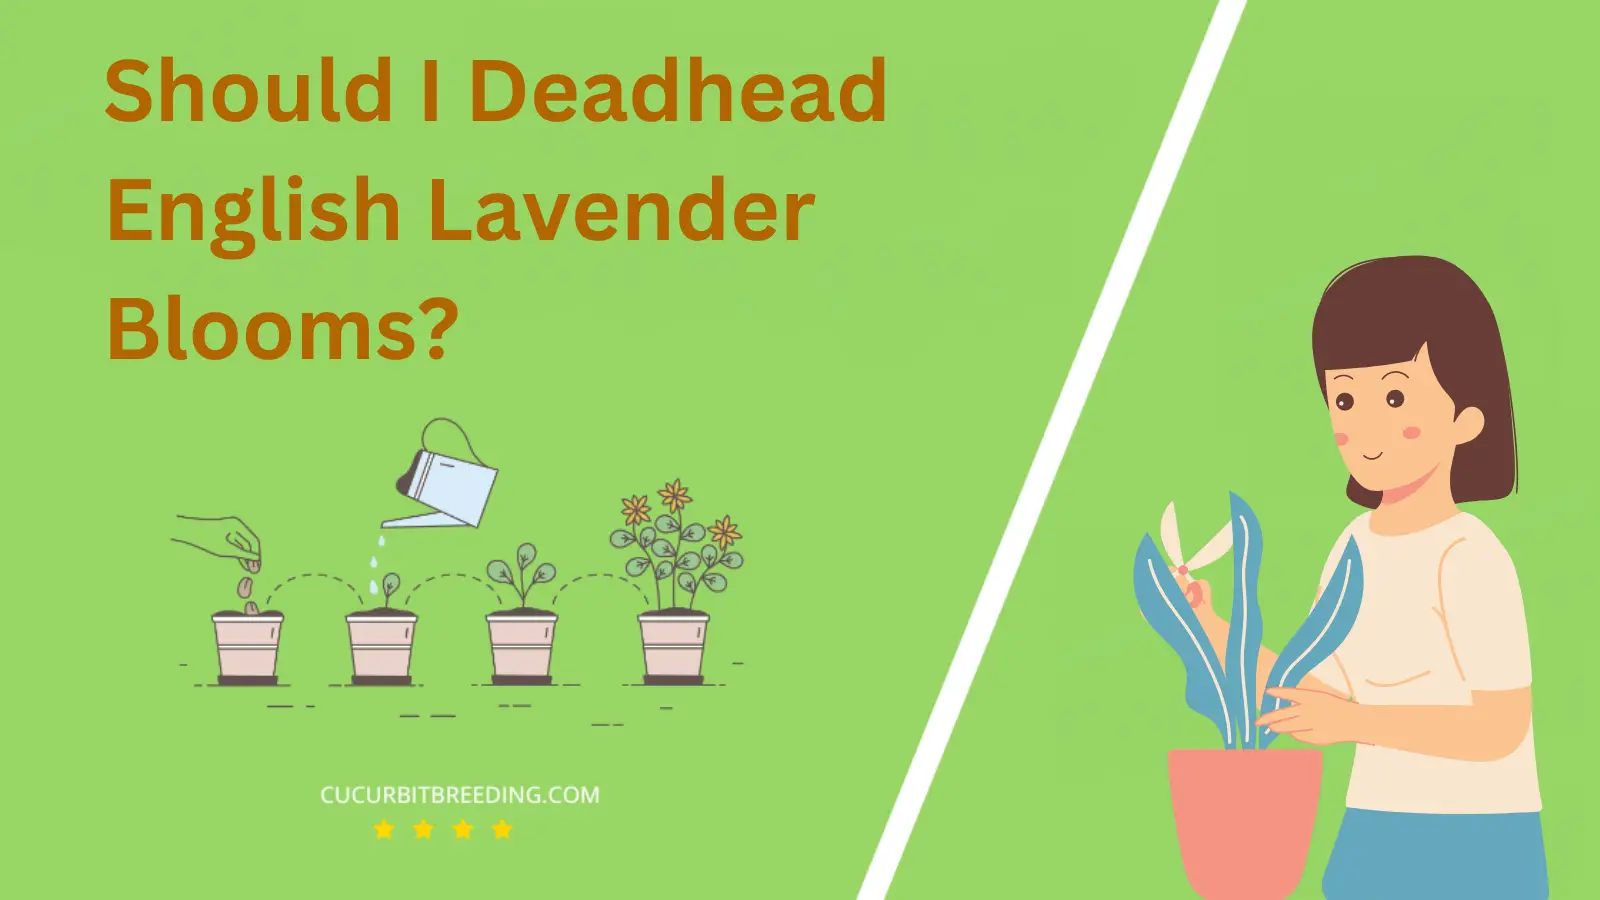 Should I Deadhead English Lavender Blooms?